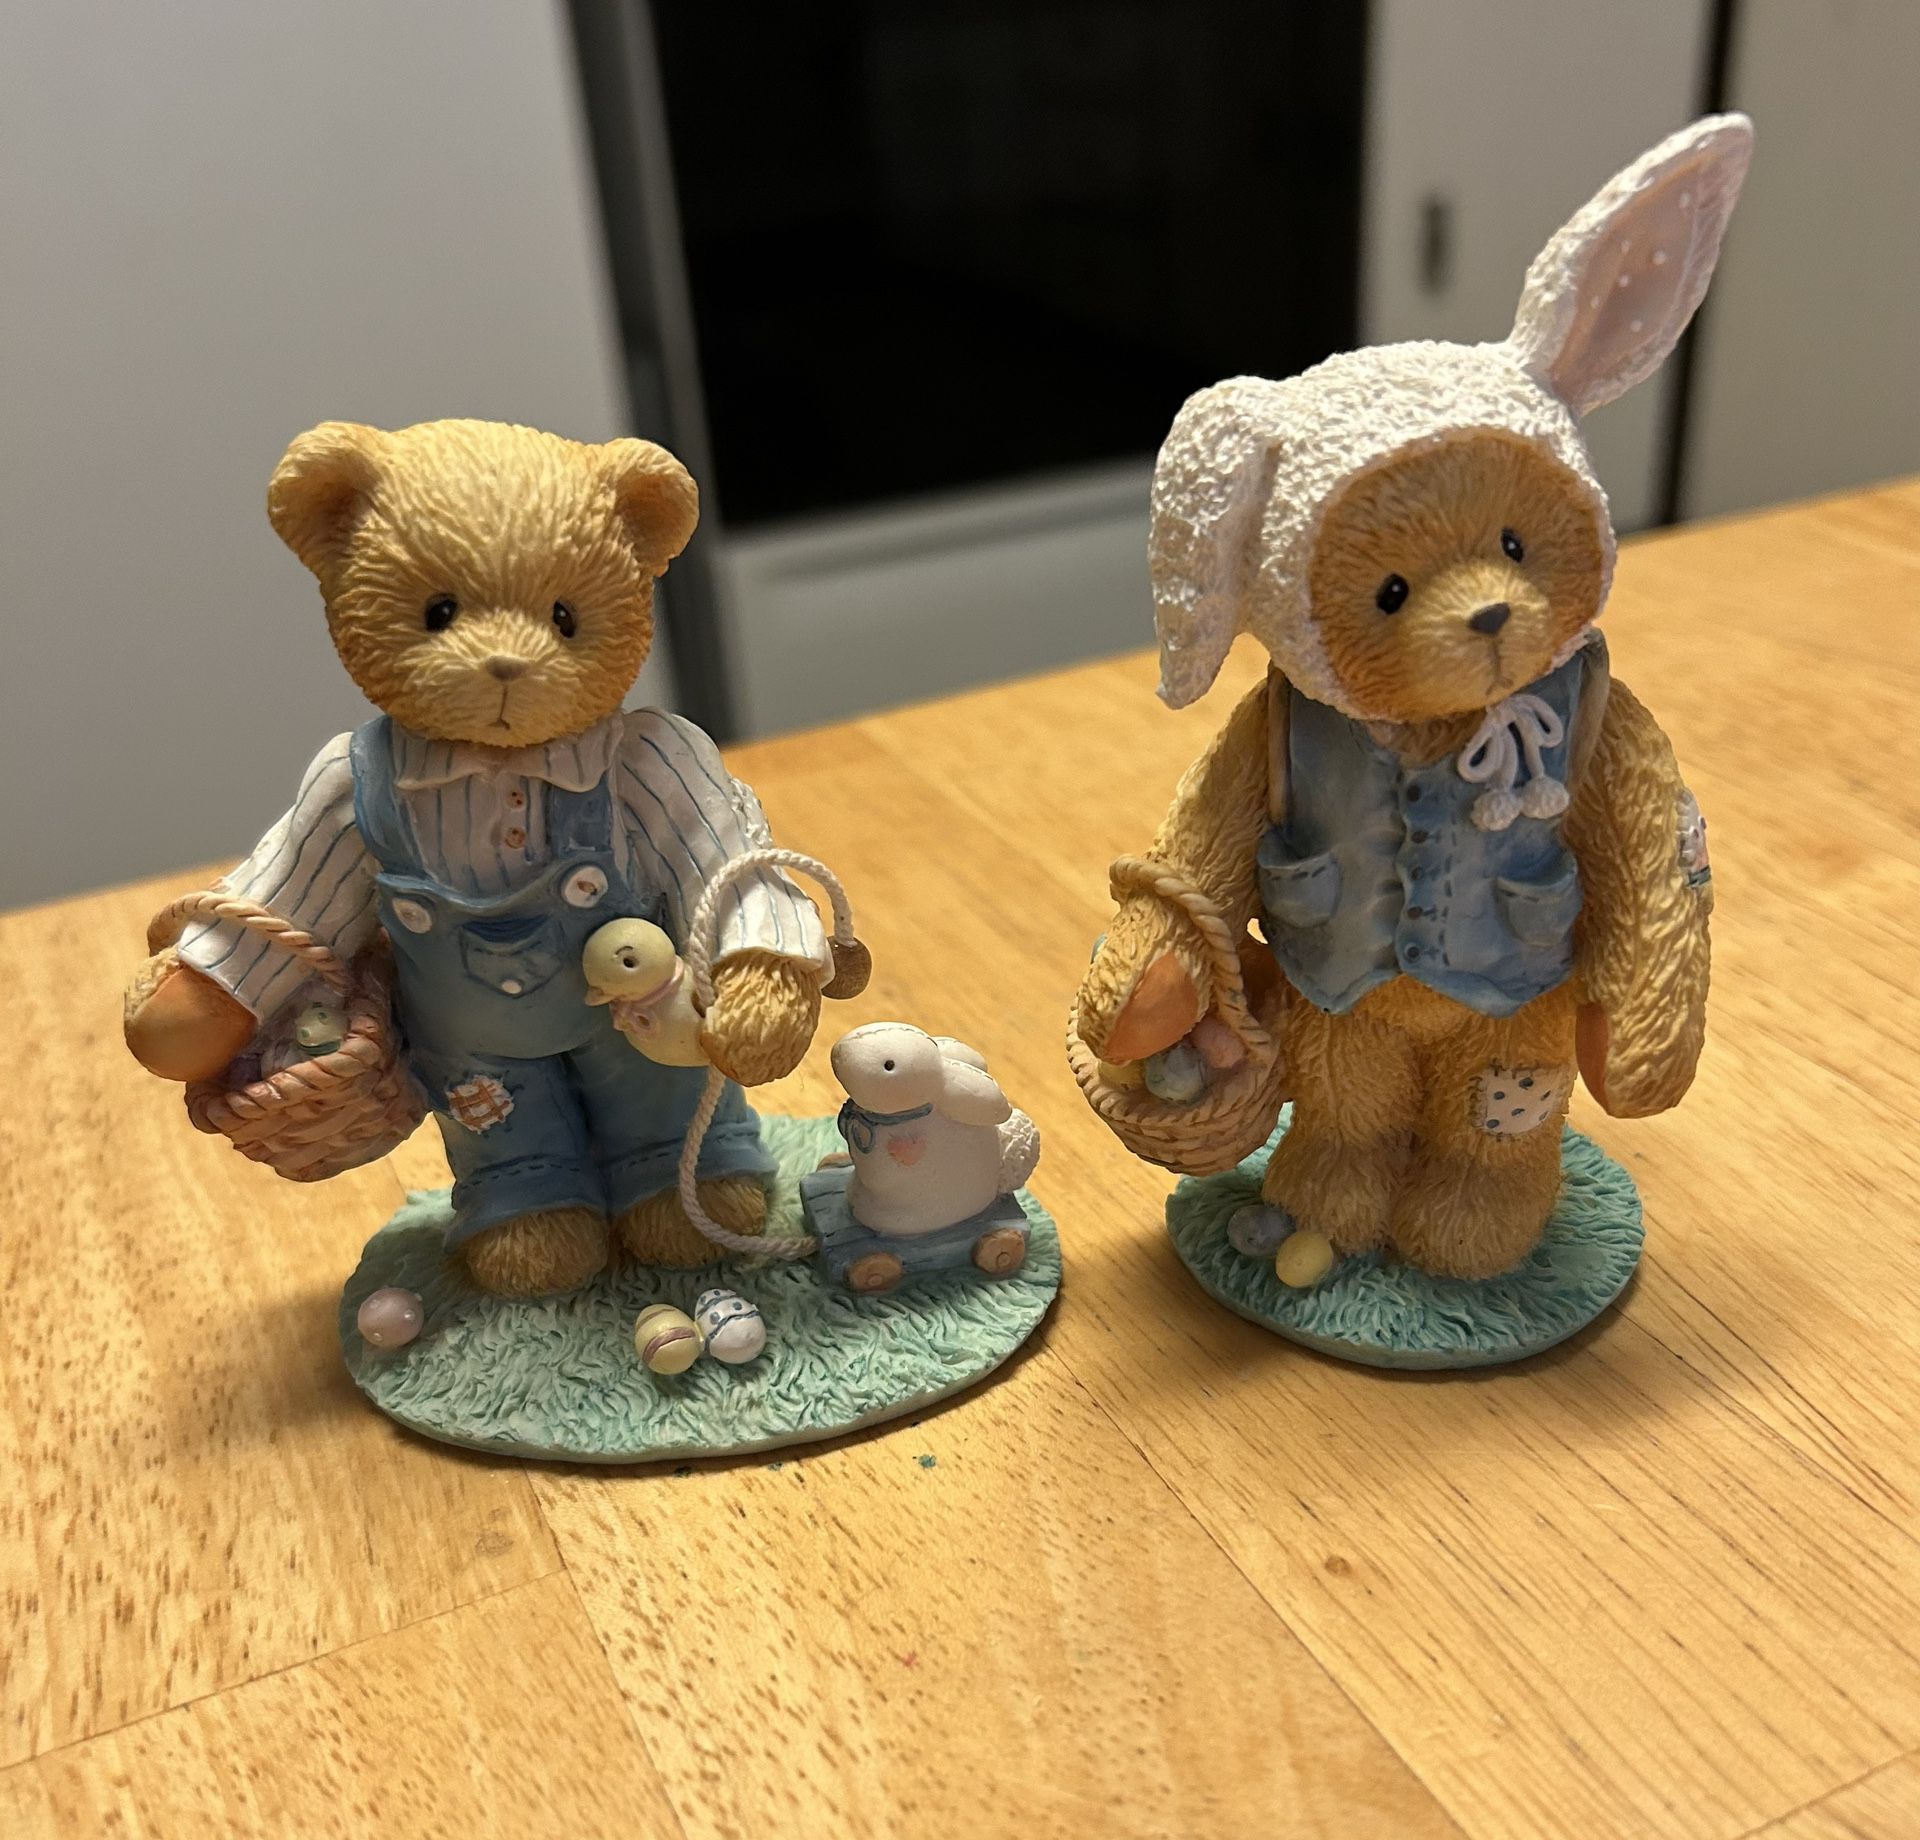 2 Cherished Teddies Easter Figurines “Donald & Peter” Bear